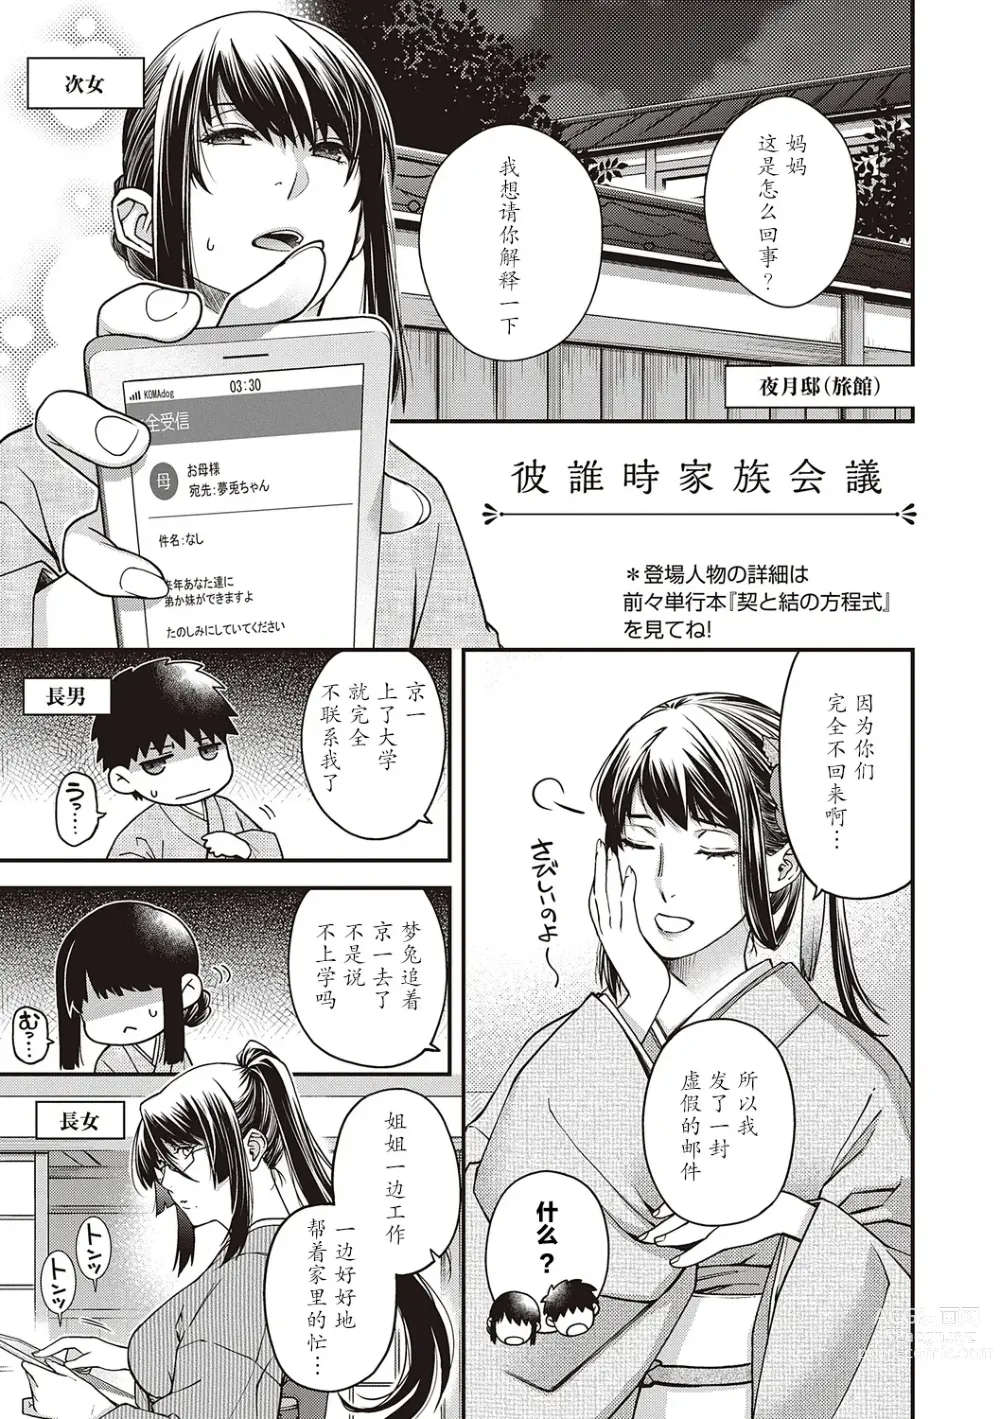 Page 1 of manga 彼誰時家族会議  演目『廻夜のケモノ』